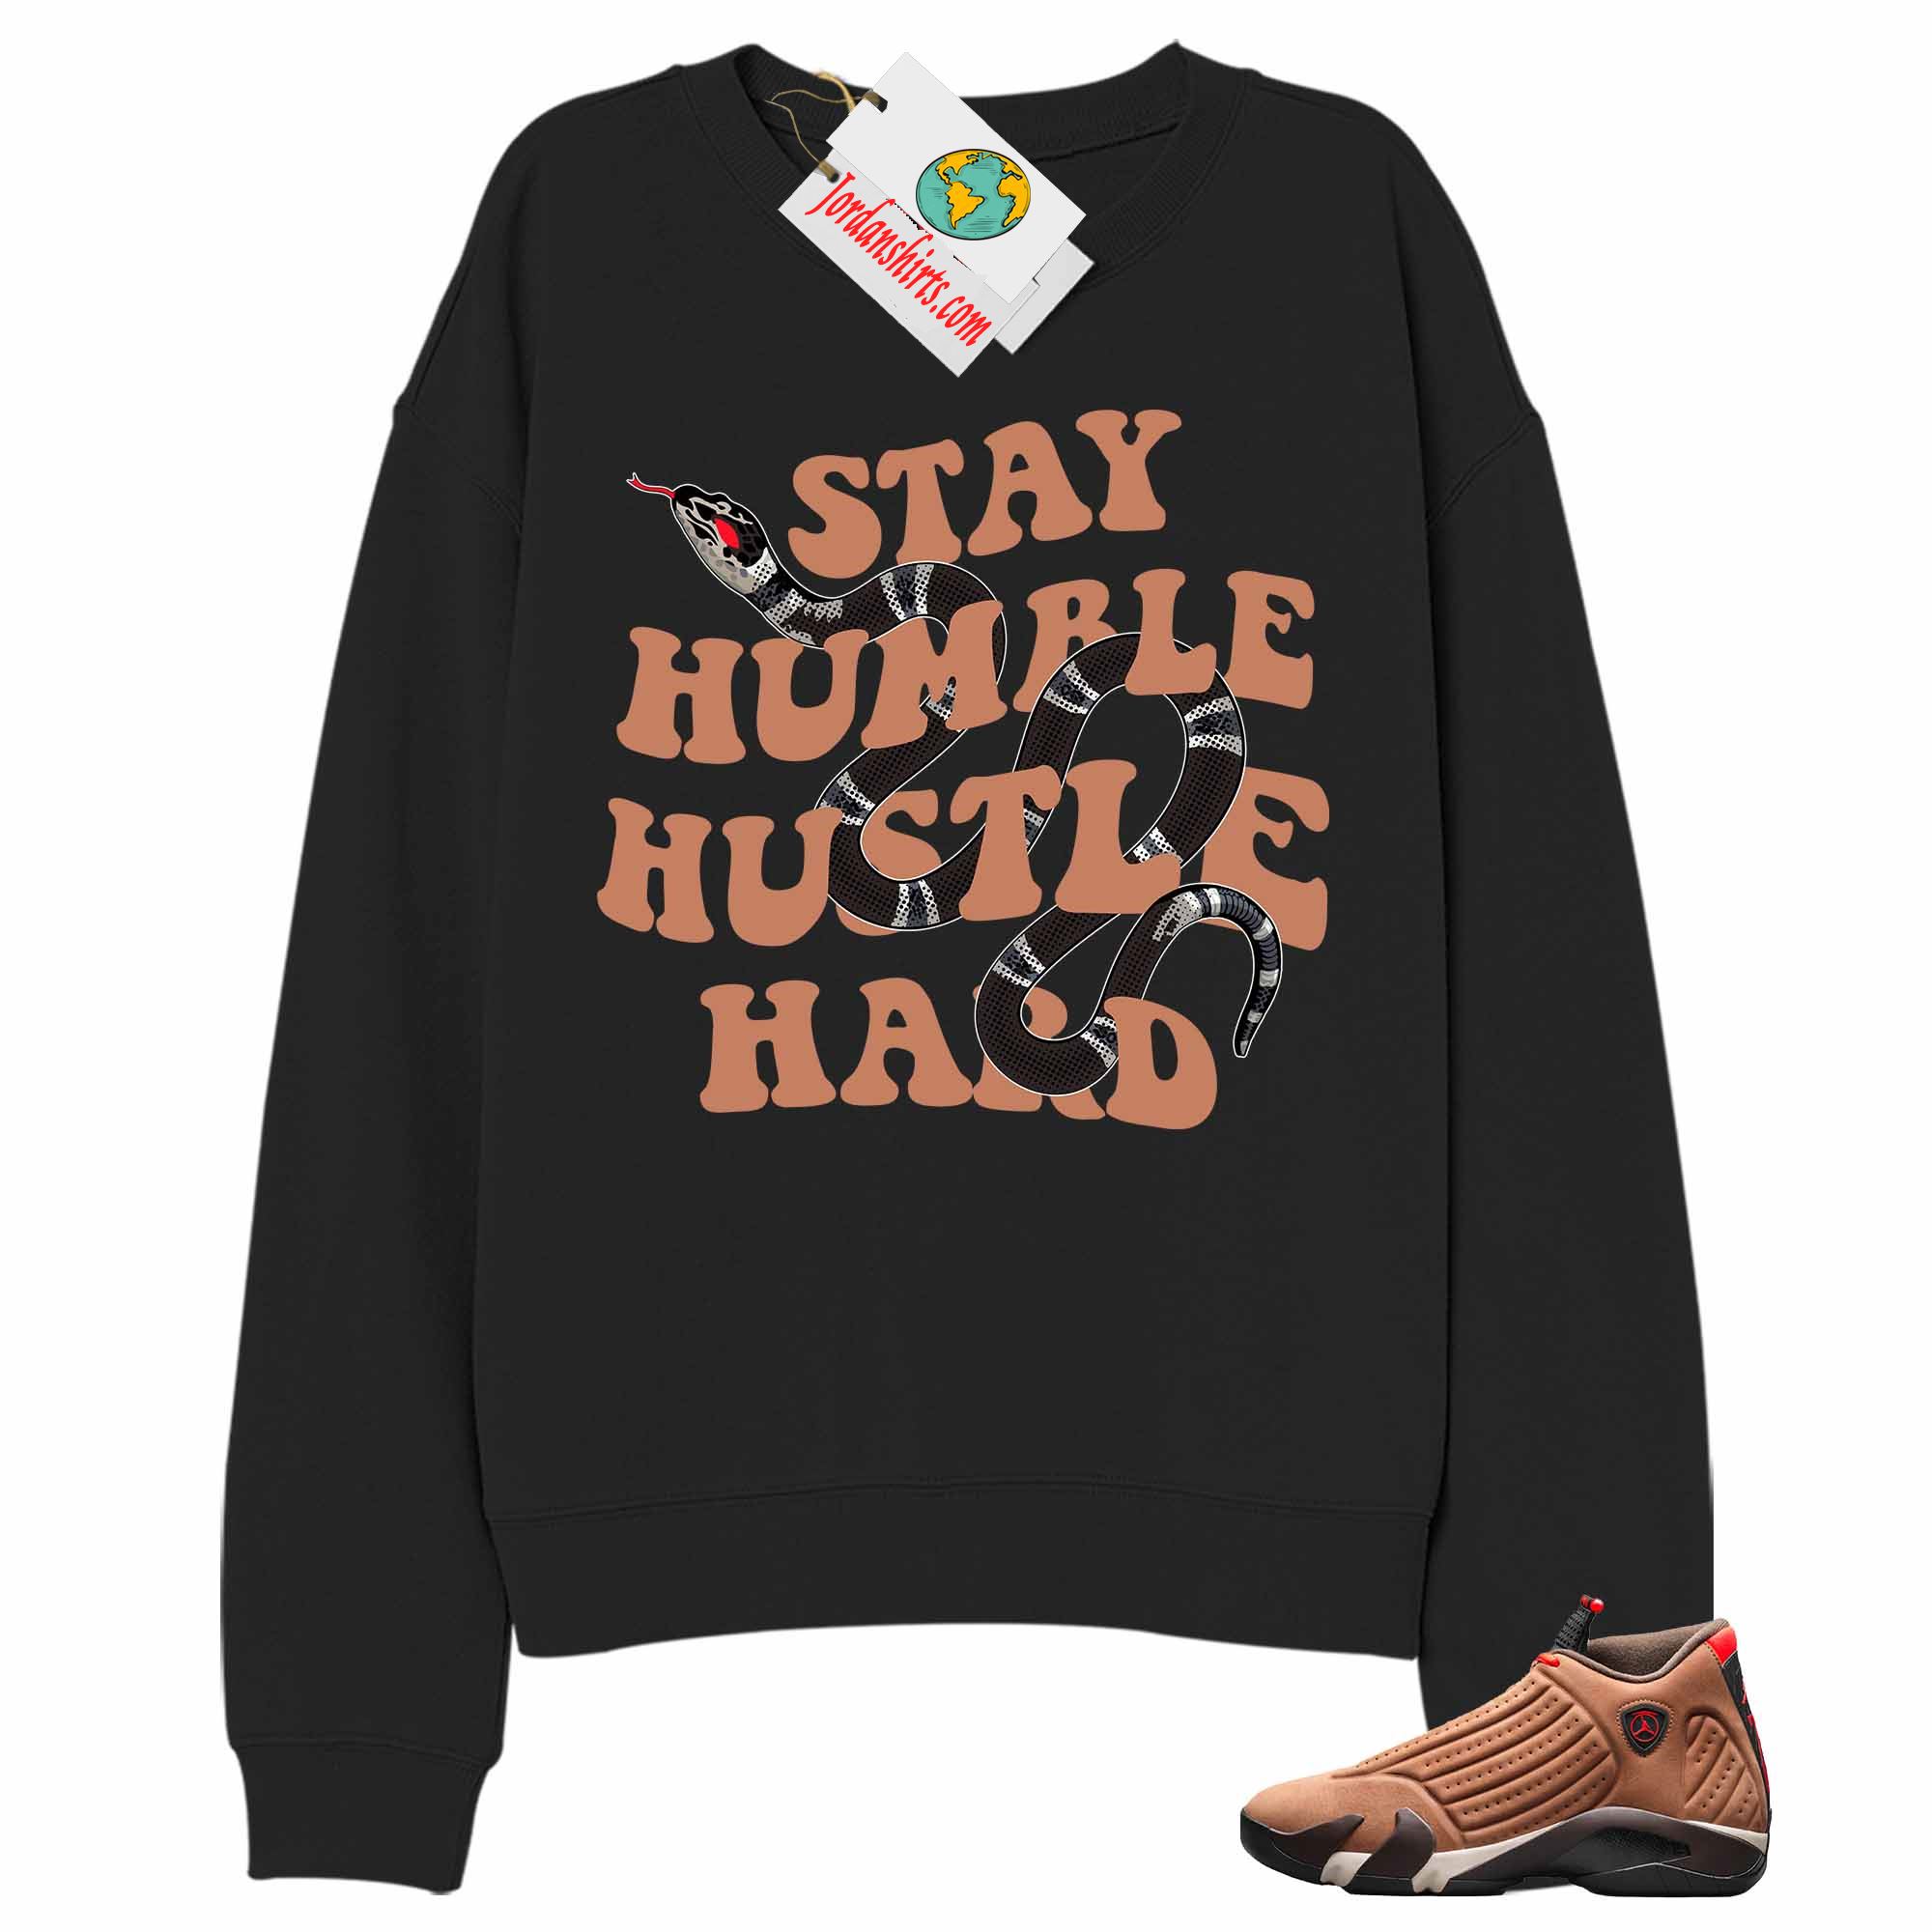 Jordan 14 Sweatshirt, Stay Humble Hustle Hard King Snake Black Sweatshirt Air Jordan 14 Winterized 14s Plus Size Up To 5xl